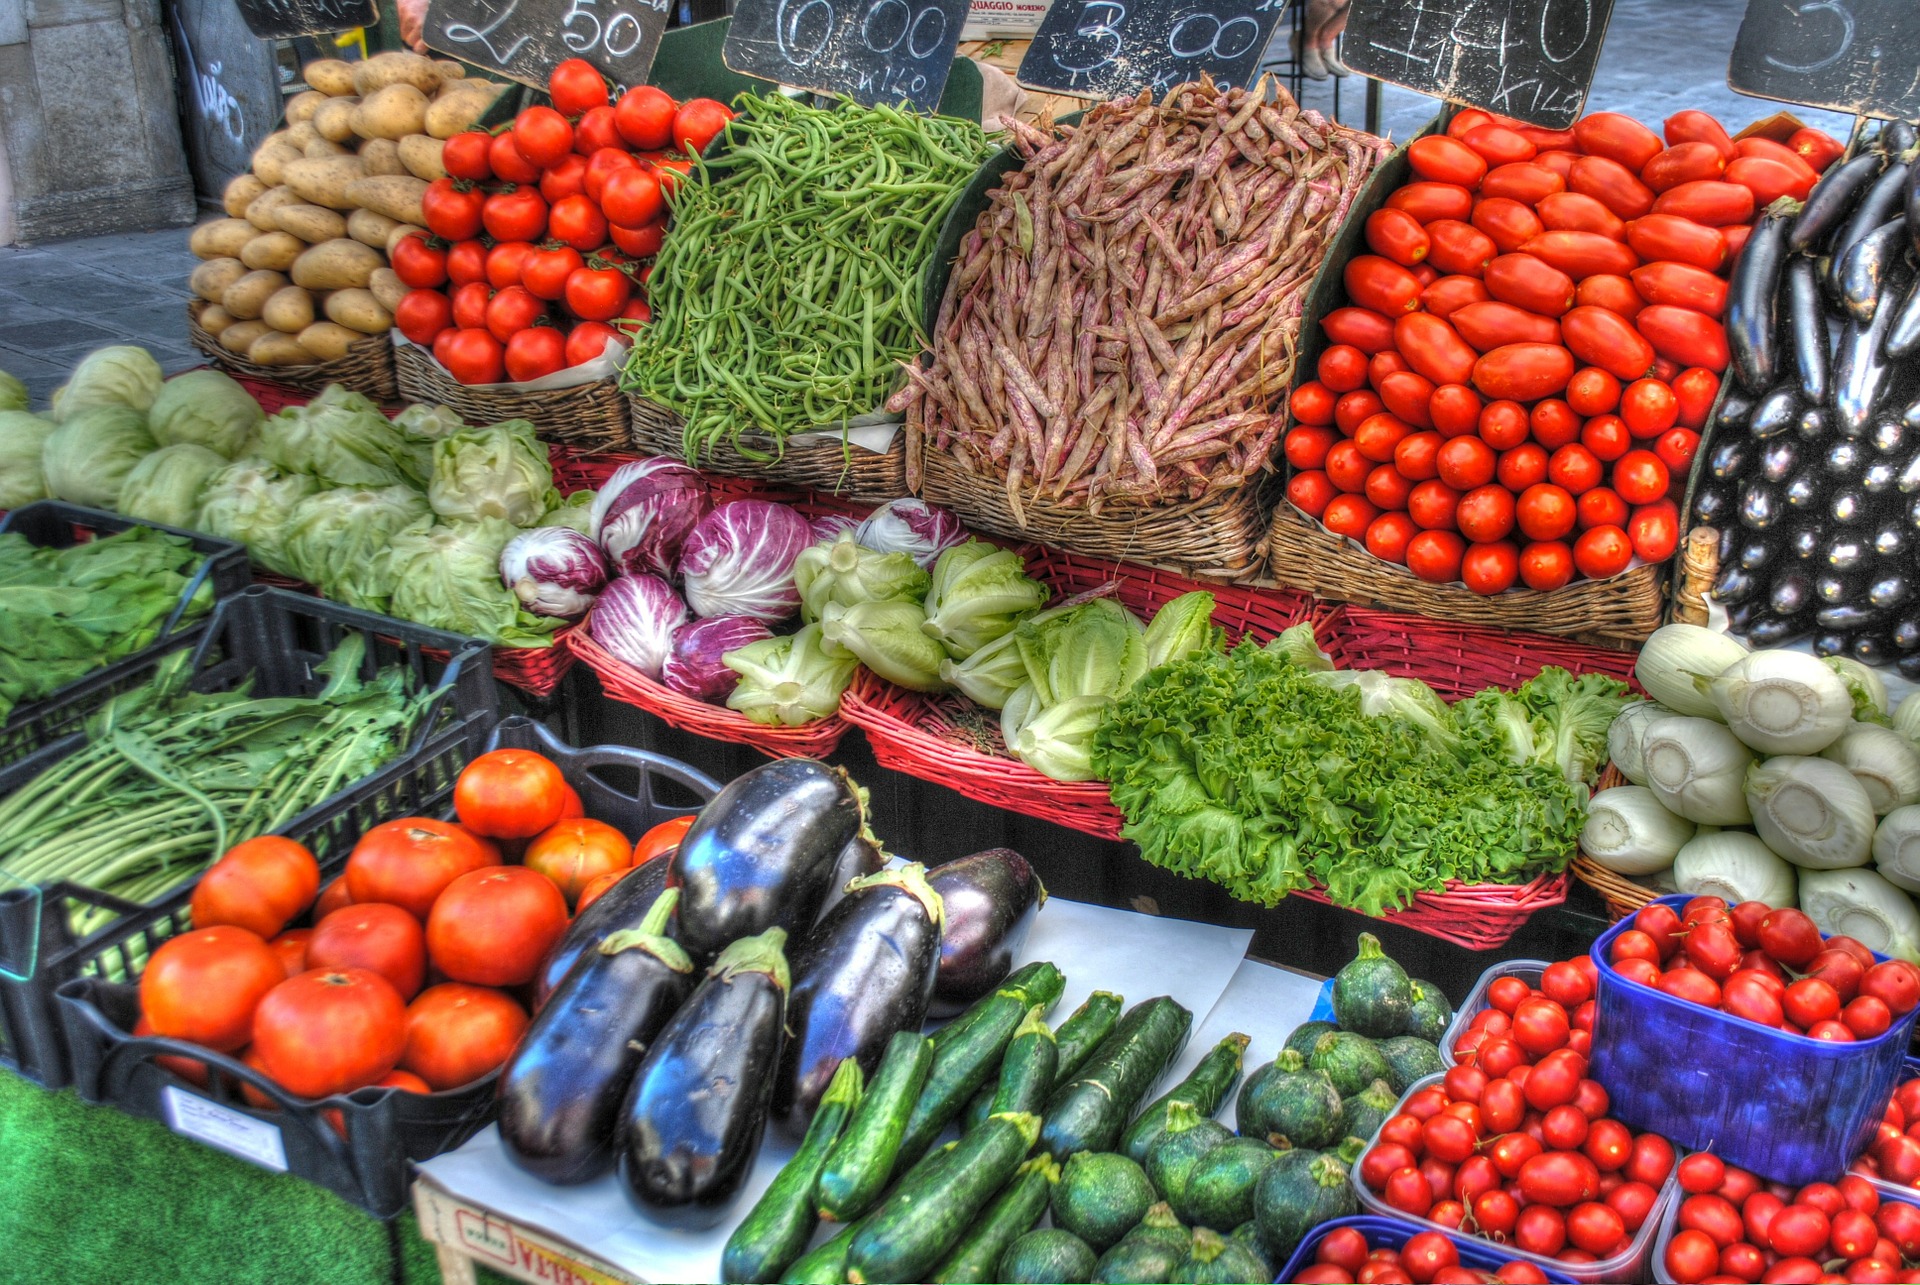 Image: Government, media blame climate change for skyrocketing vegetable prices